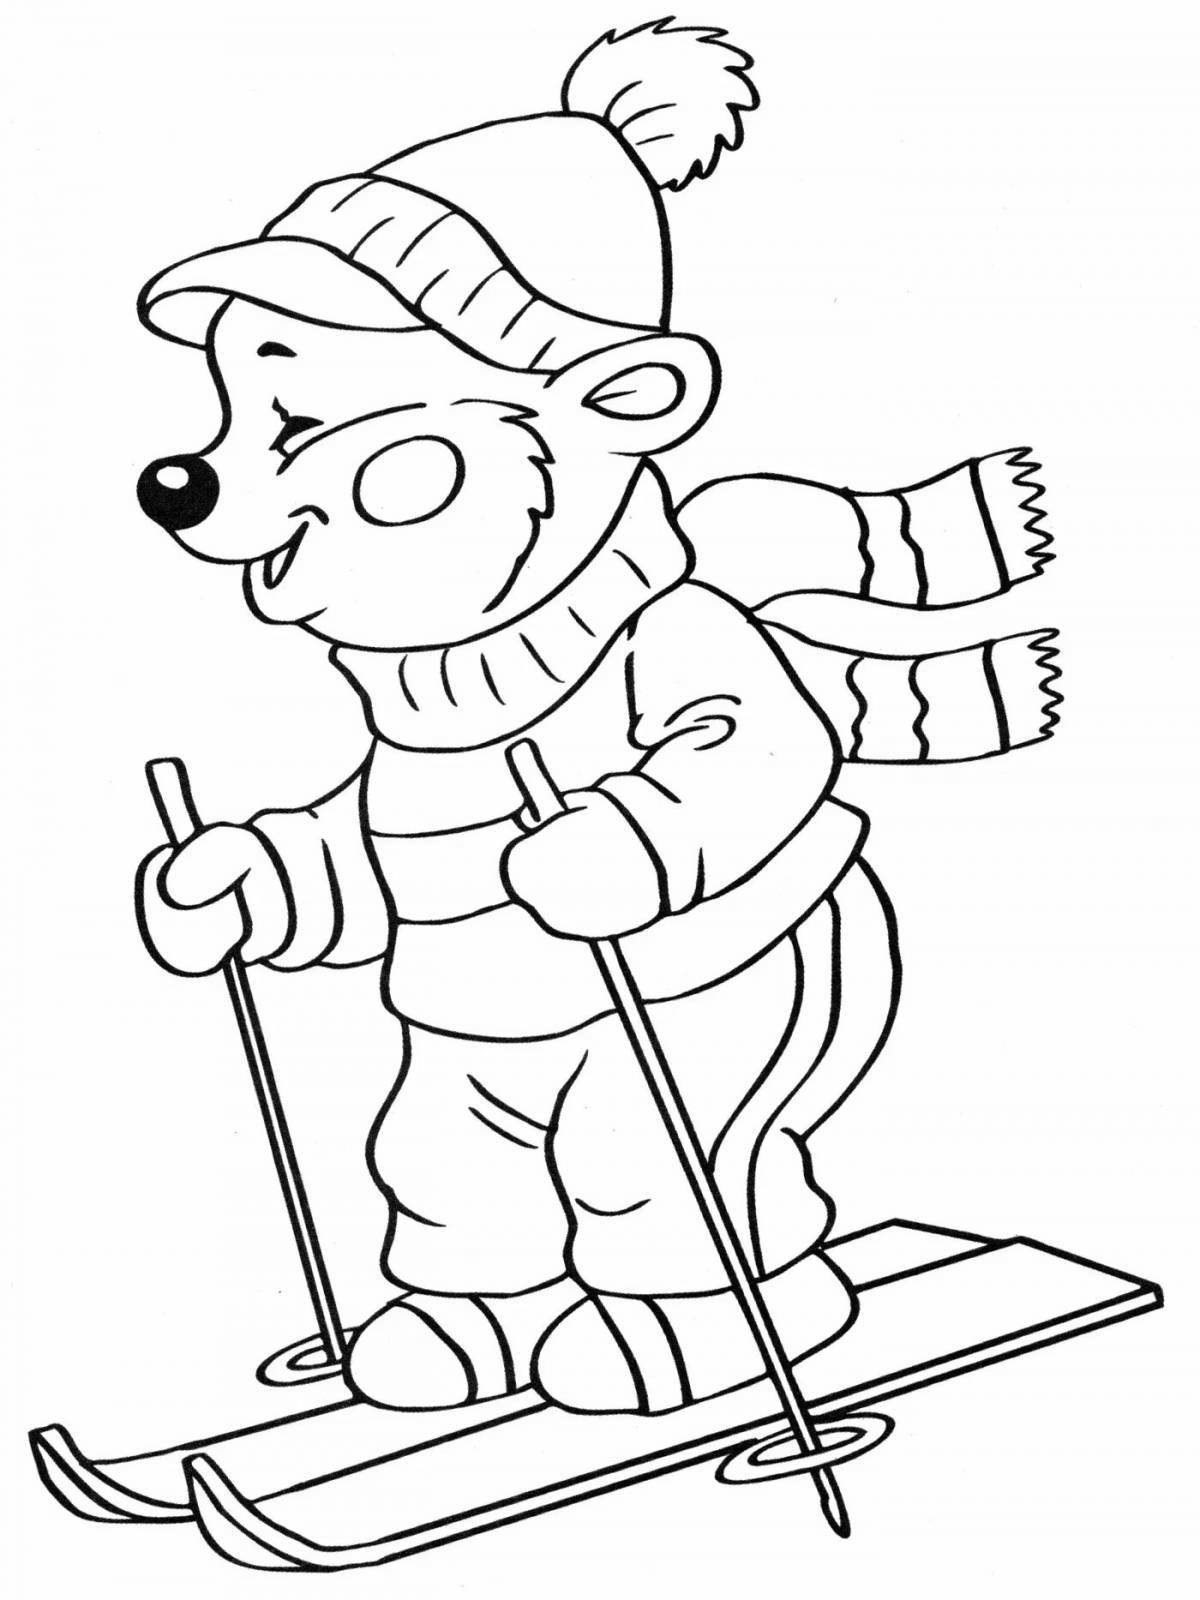 Rampant winter sports coloring book